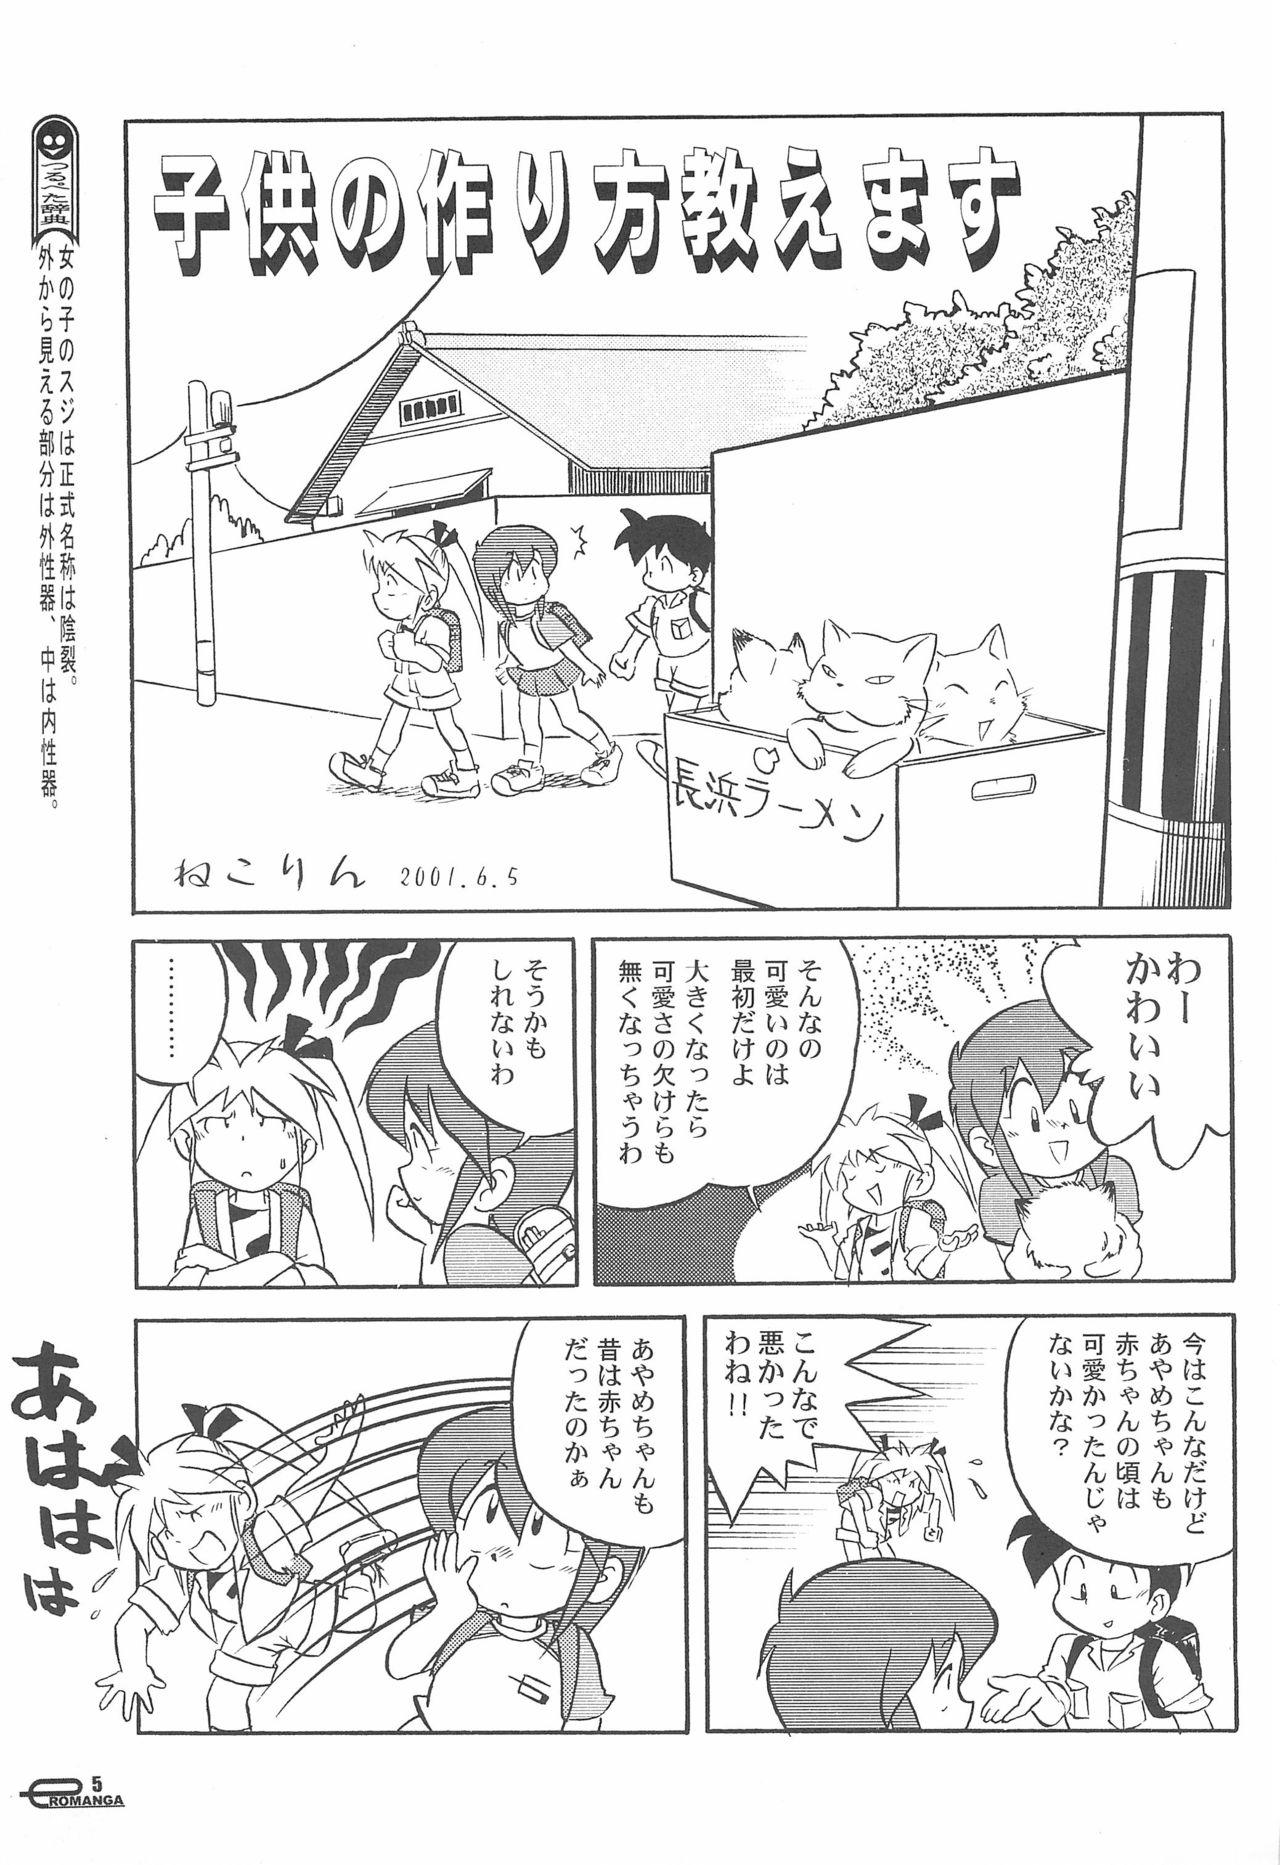 Amateur Manga Science Onna no ko no Himitsu - Manga science China - Page 7